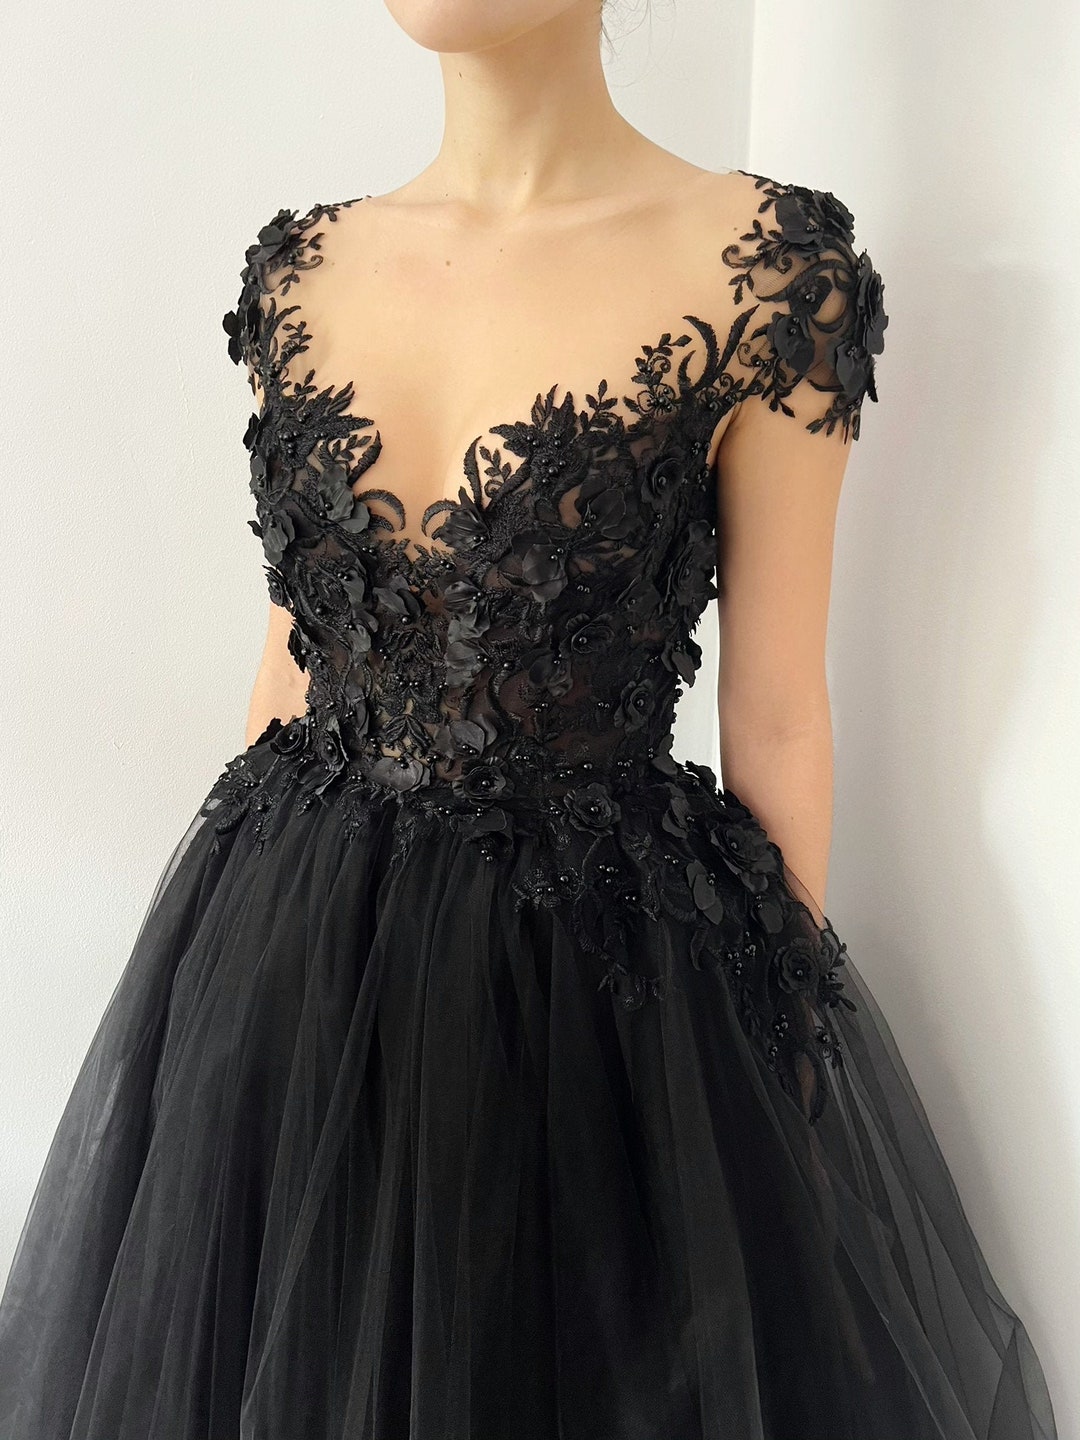 Black Gothic 3D Beaded Floral Lace Applique Tulle Dress, Alternative ...